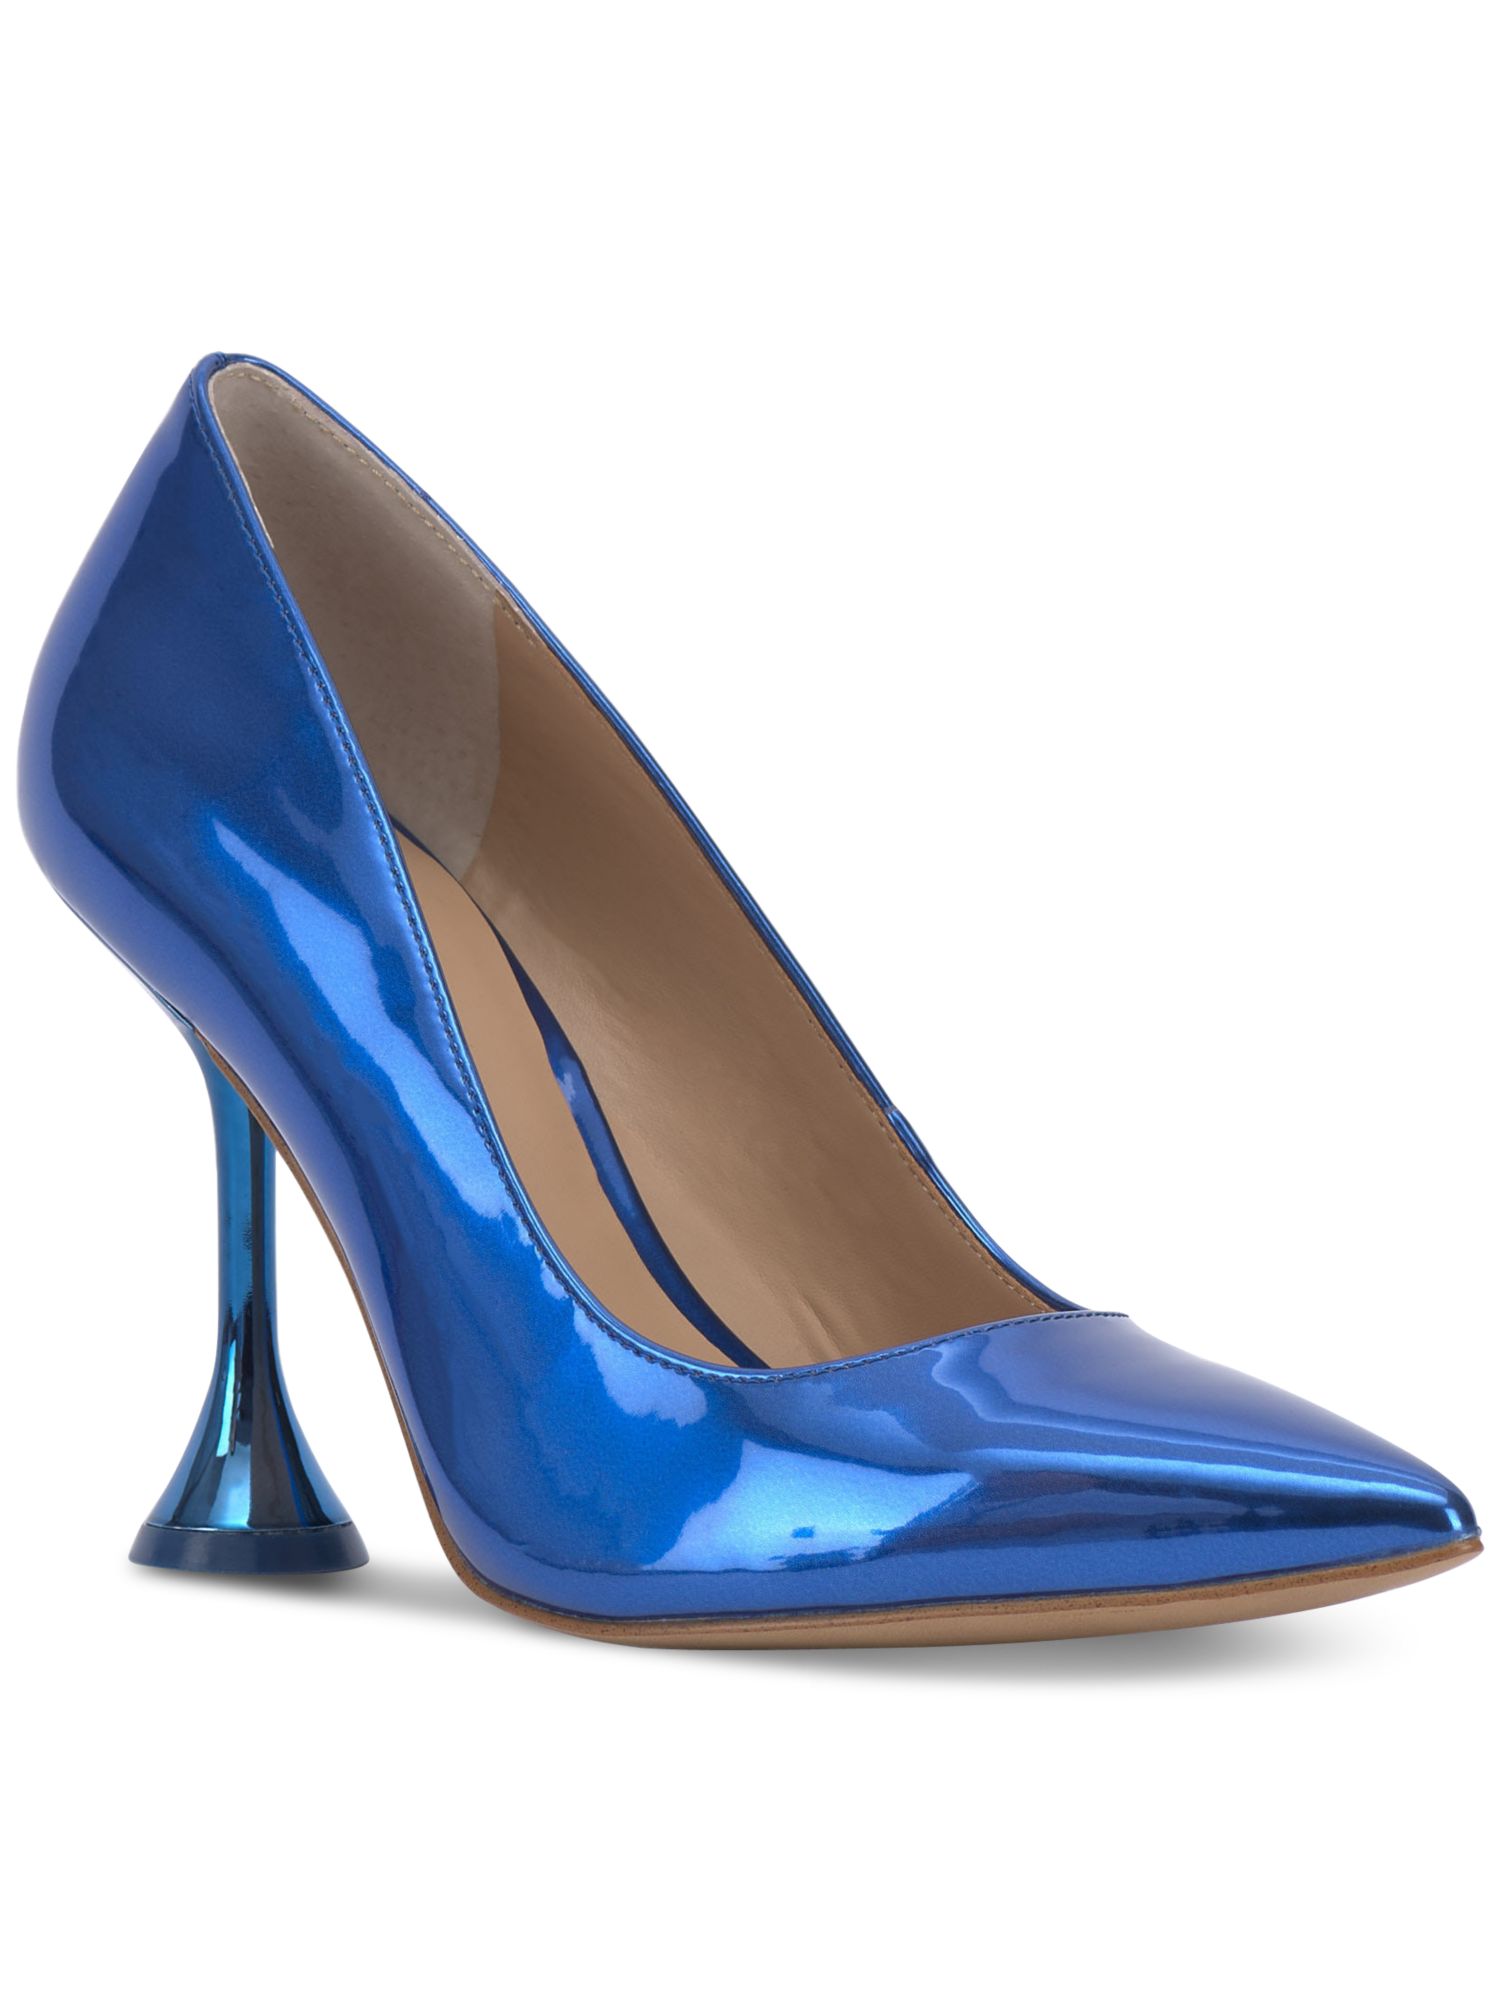 International Concepts INC Womens Blue Comfort Savitri Pointed Toe Flare Slip On Dress Pumps Shoes 6 M